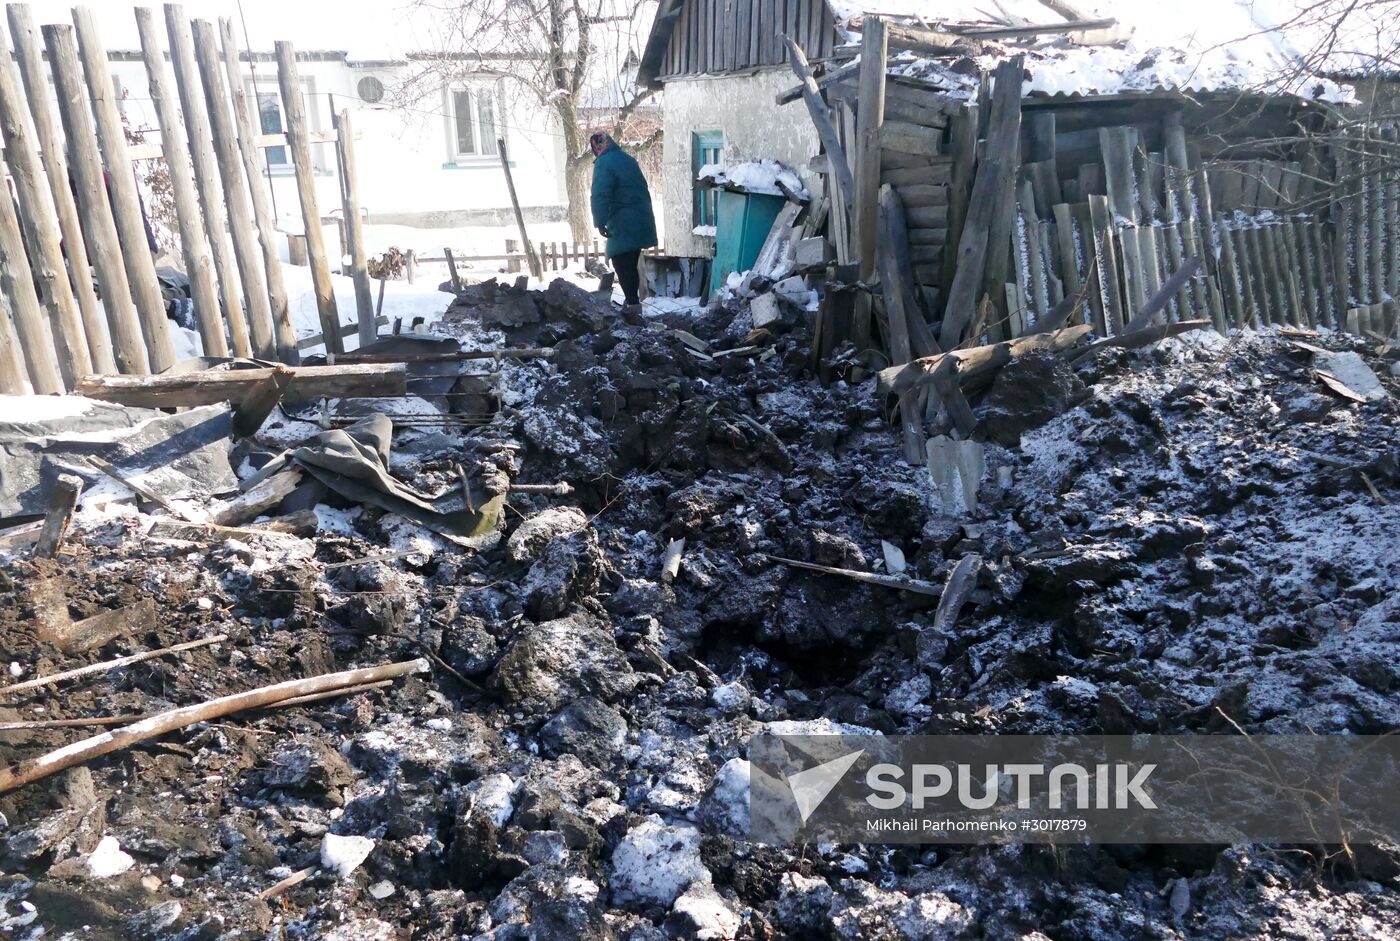 Damage caused by the shelling of Dokuchaevsk, Donetsk Region